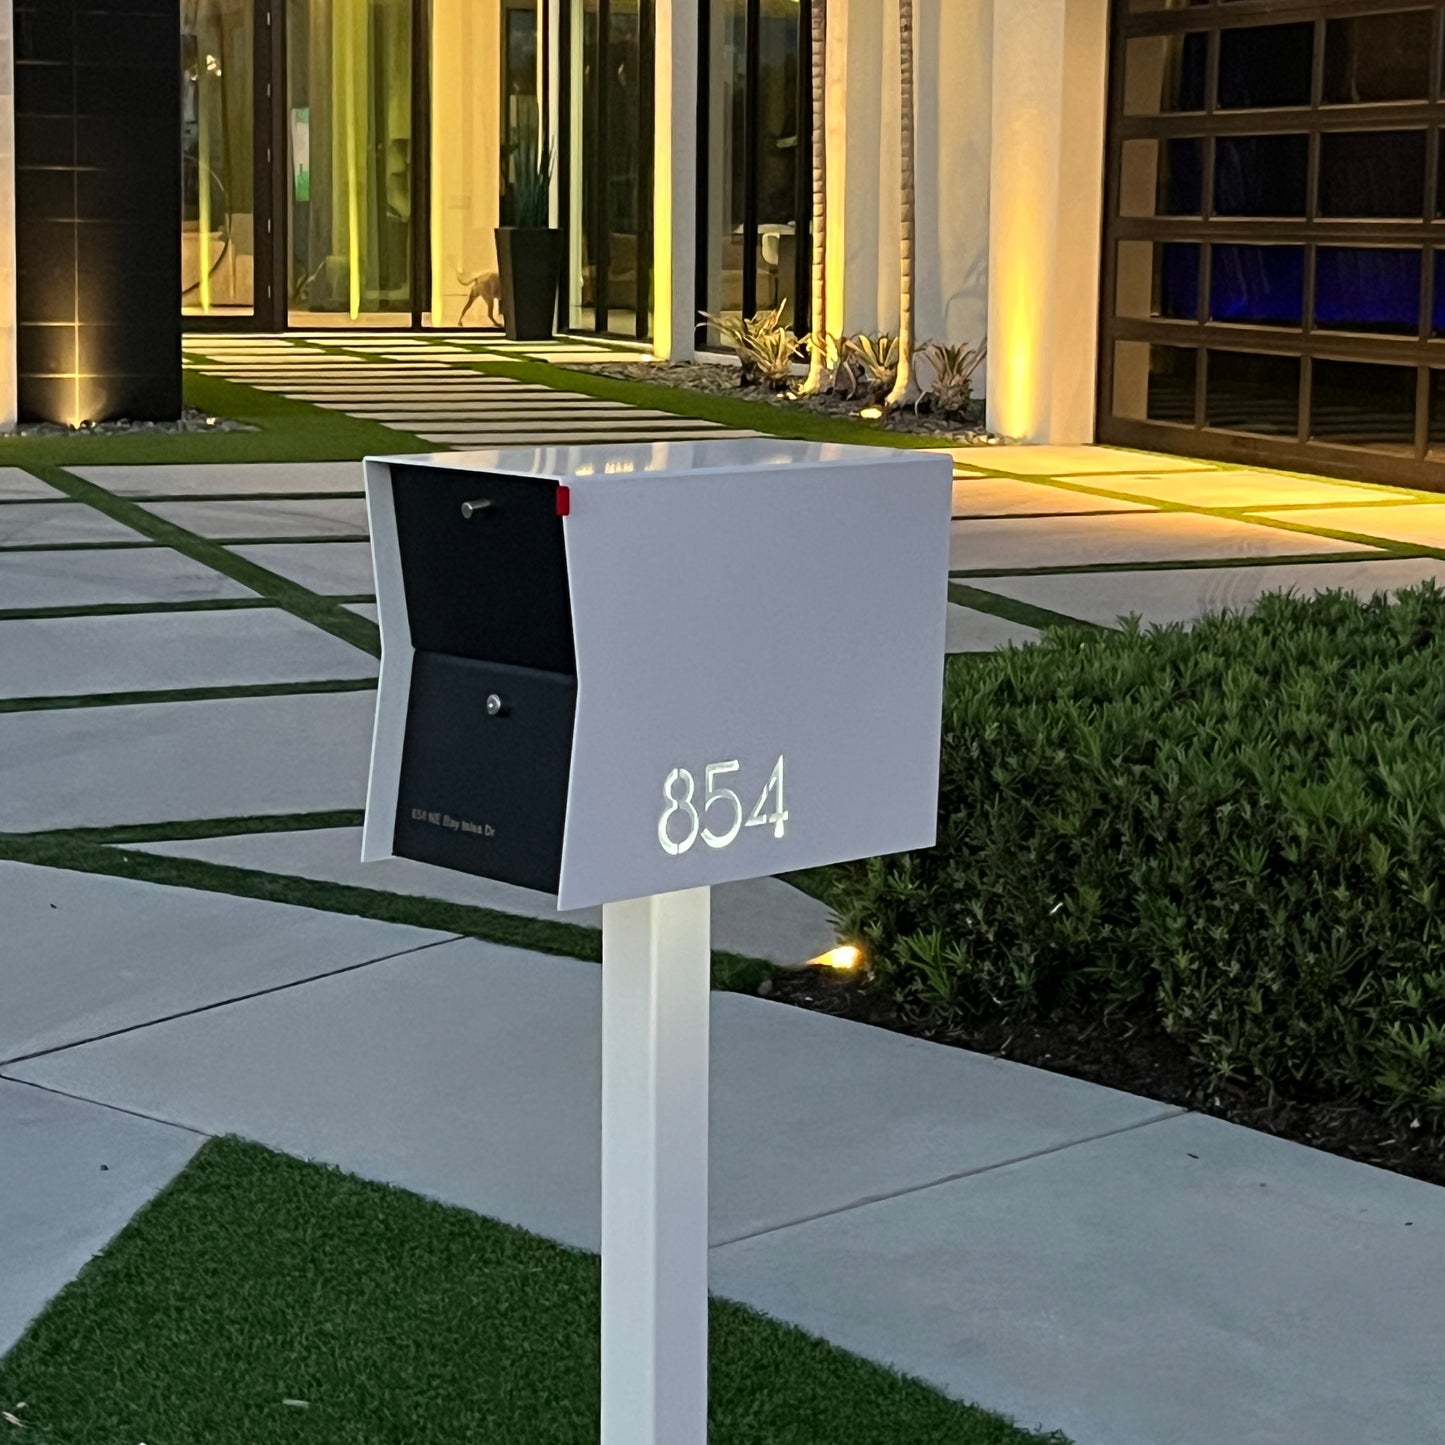 NEW! The Retrobox Locking Package Dropbox in JET BLACK - Modern Mailbox